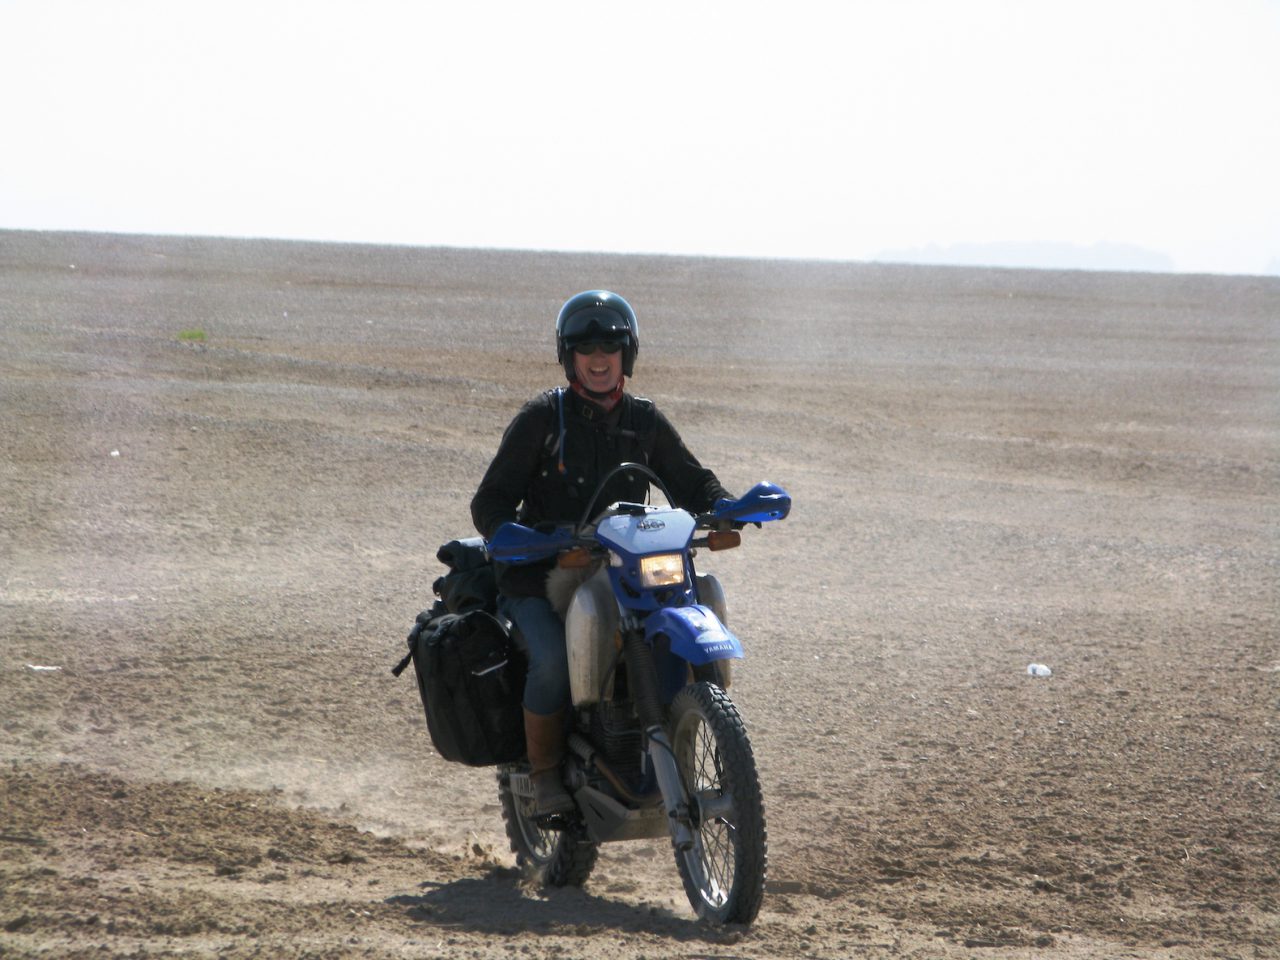 British author Lois Pryce on her motorbike